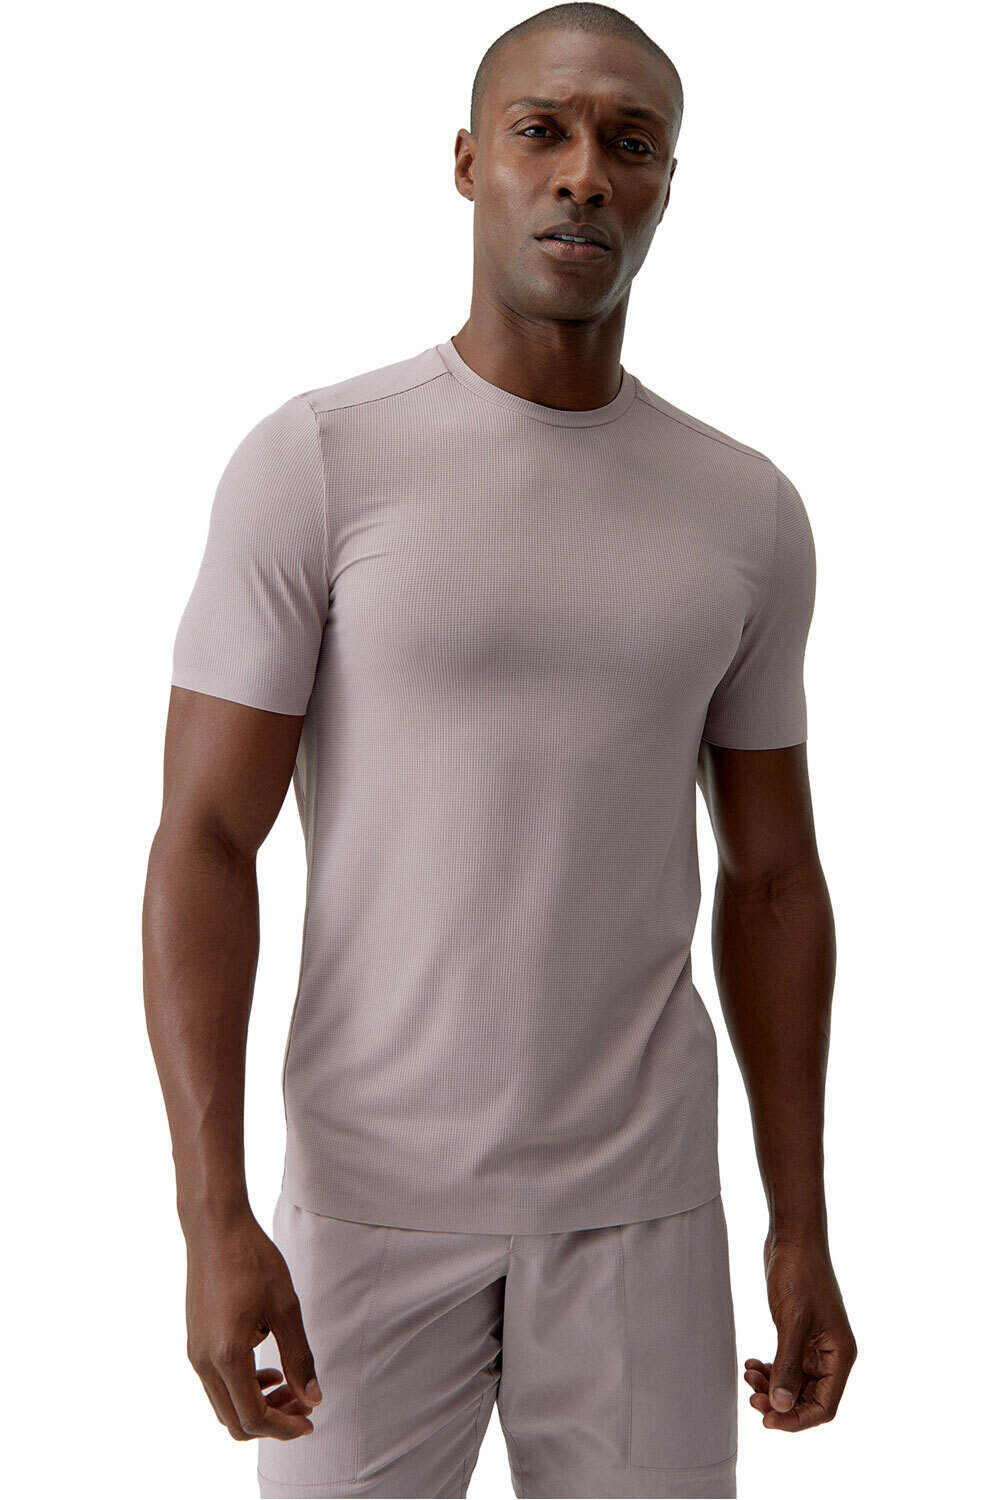 Born Living Yoga camiseta fitness hombre T-Shirt Niger vista frontal